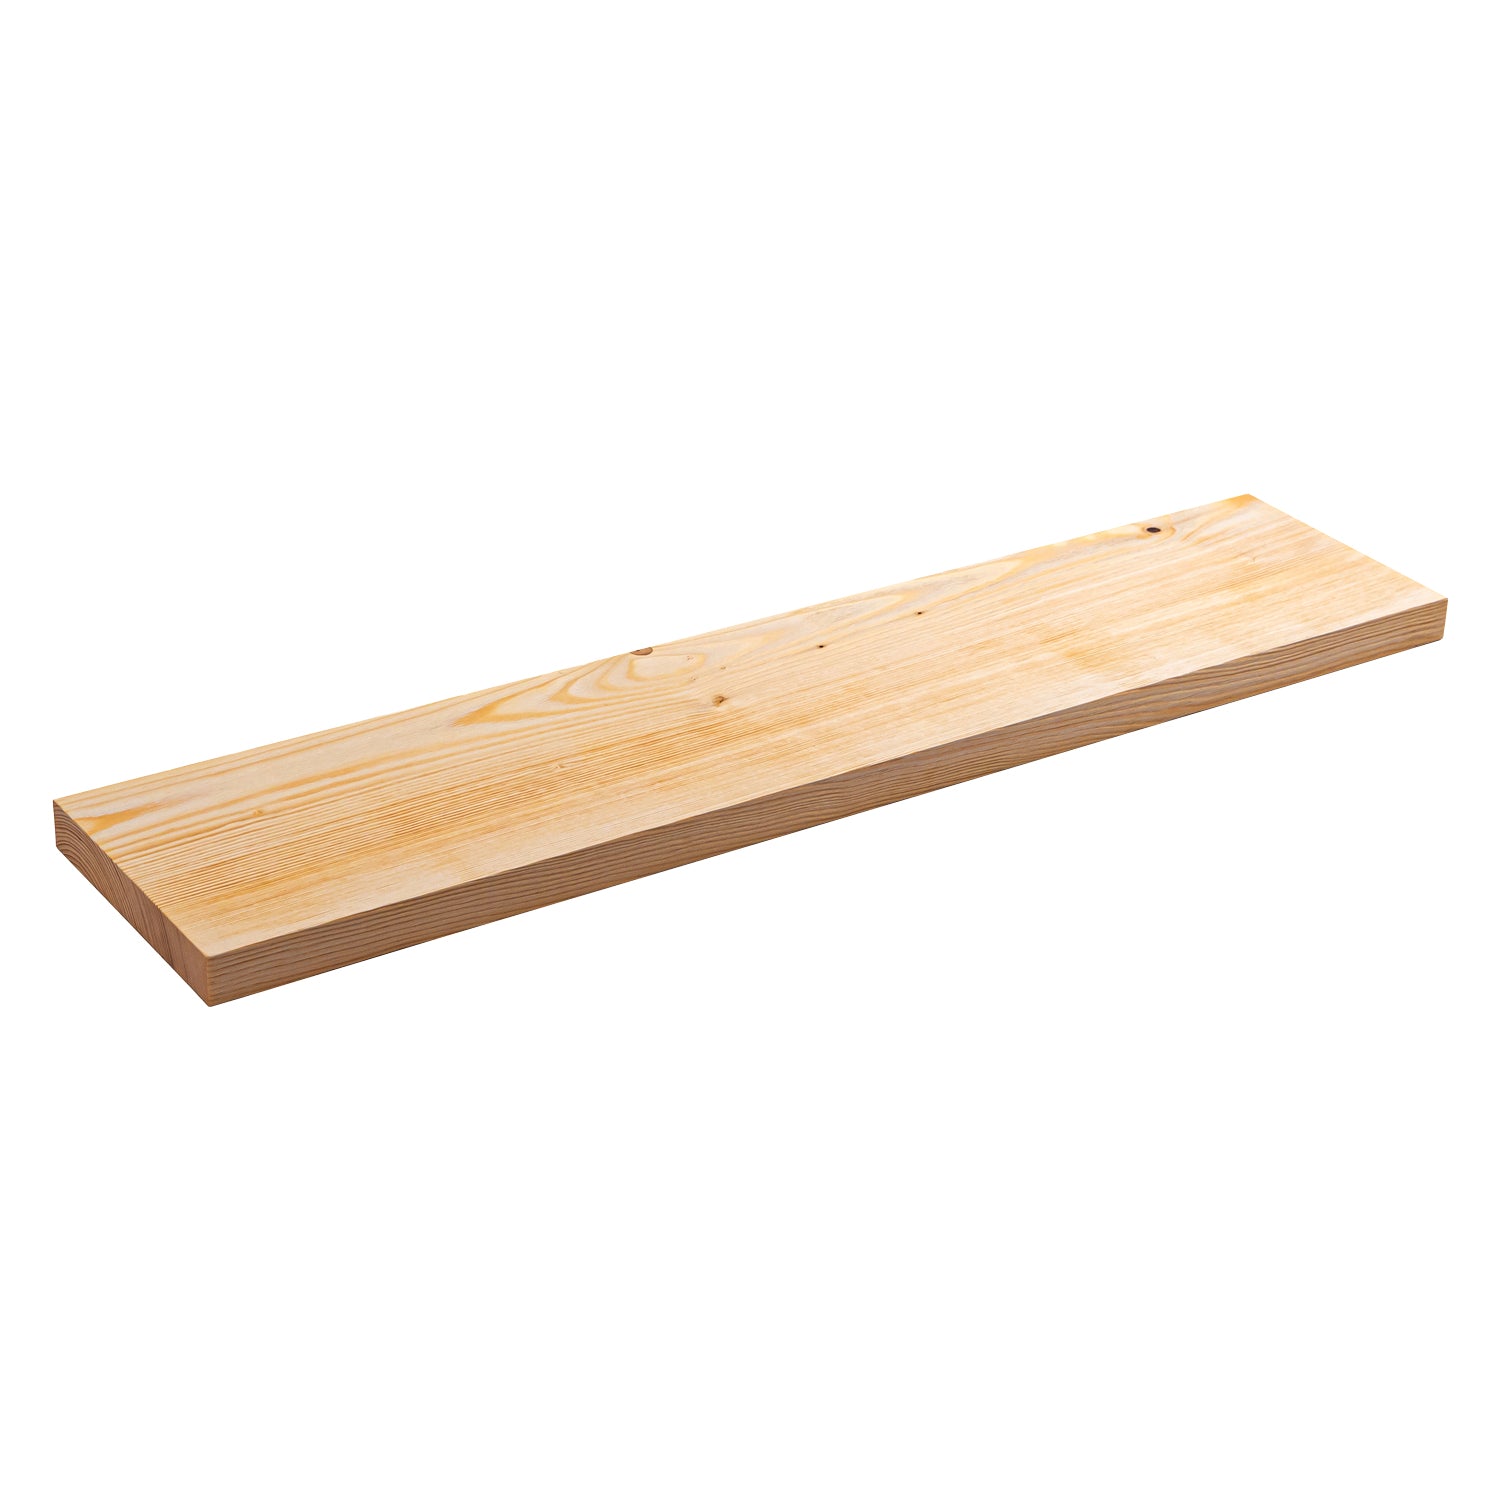 Pine Wood Shelf - 32mm thick